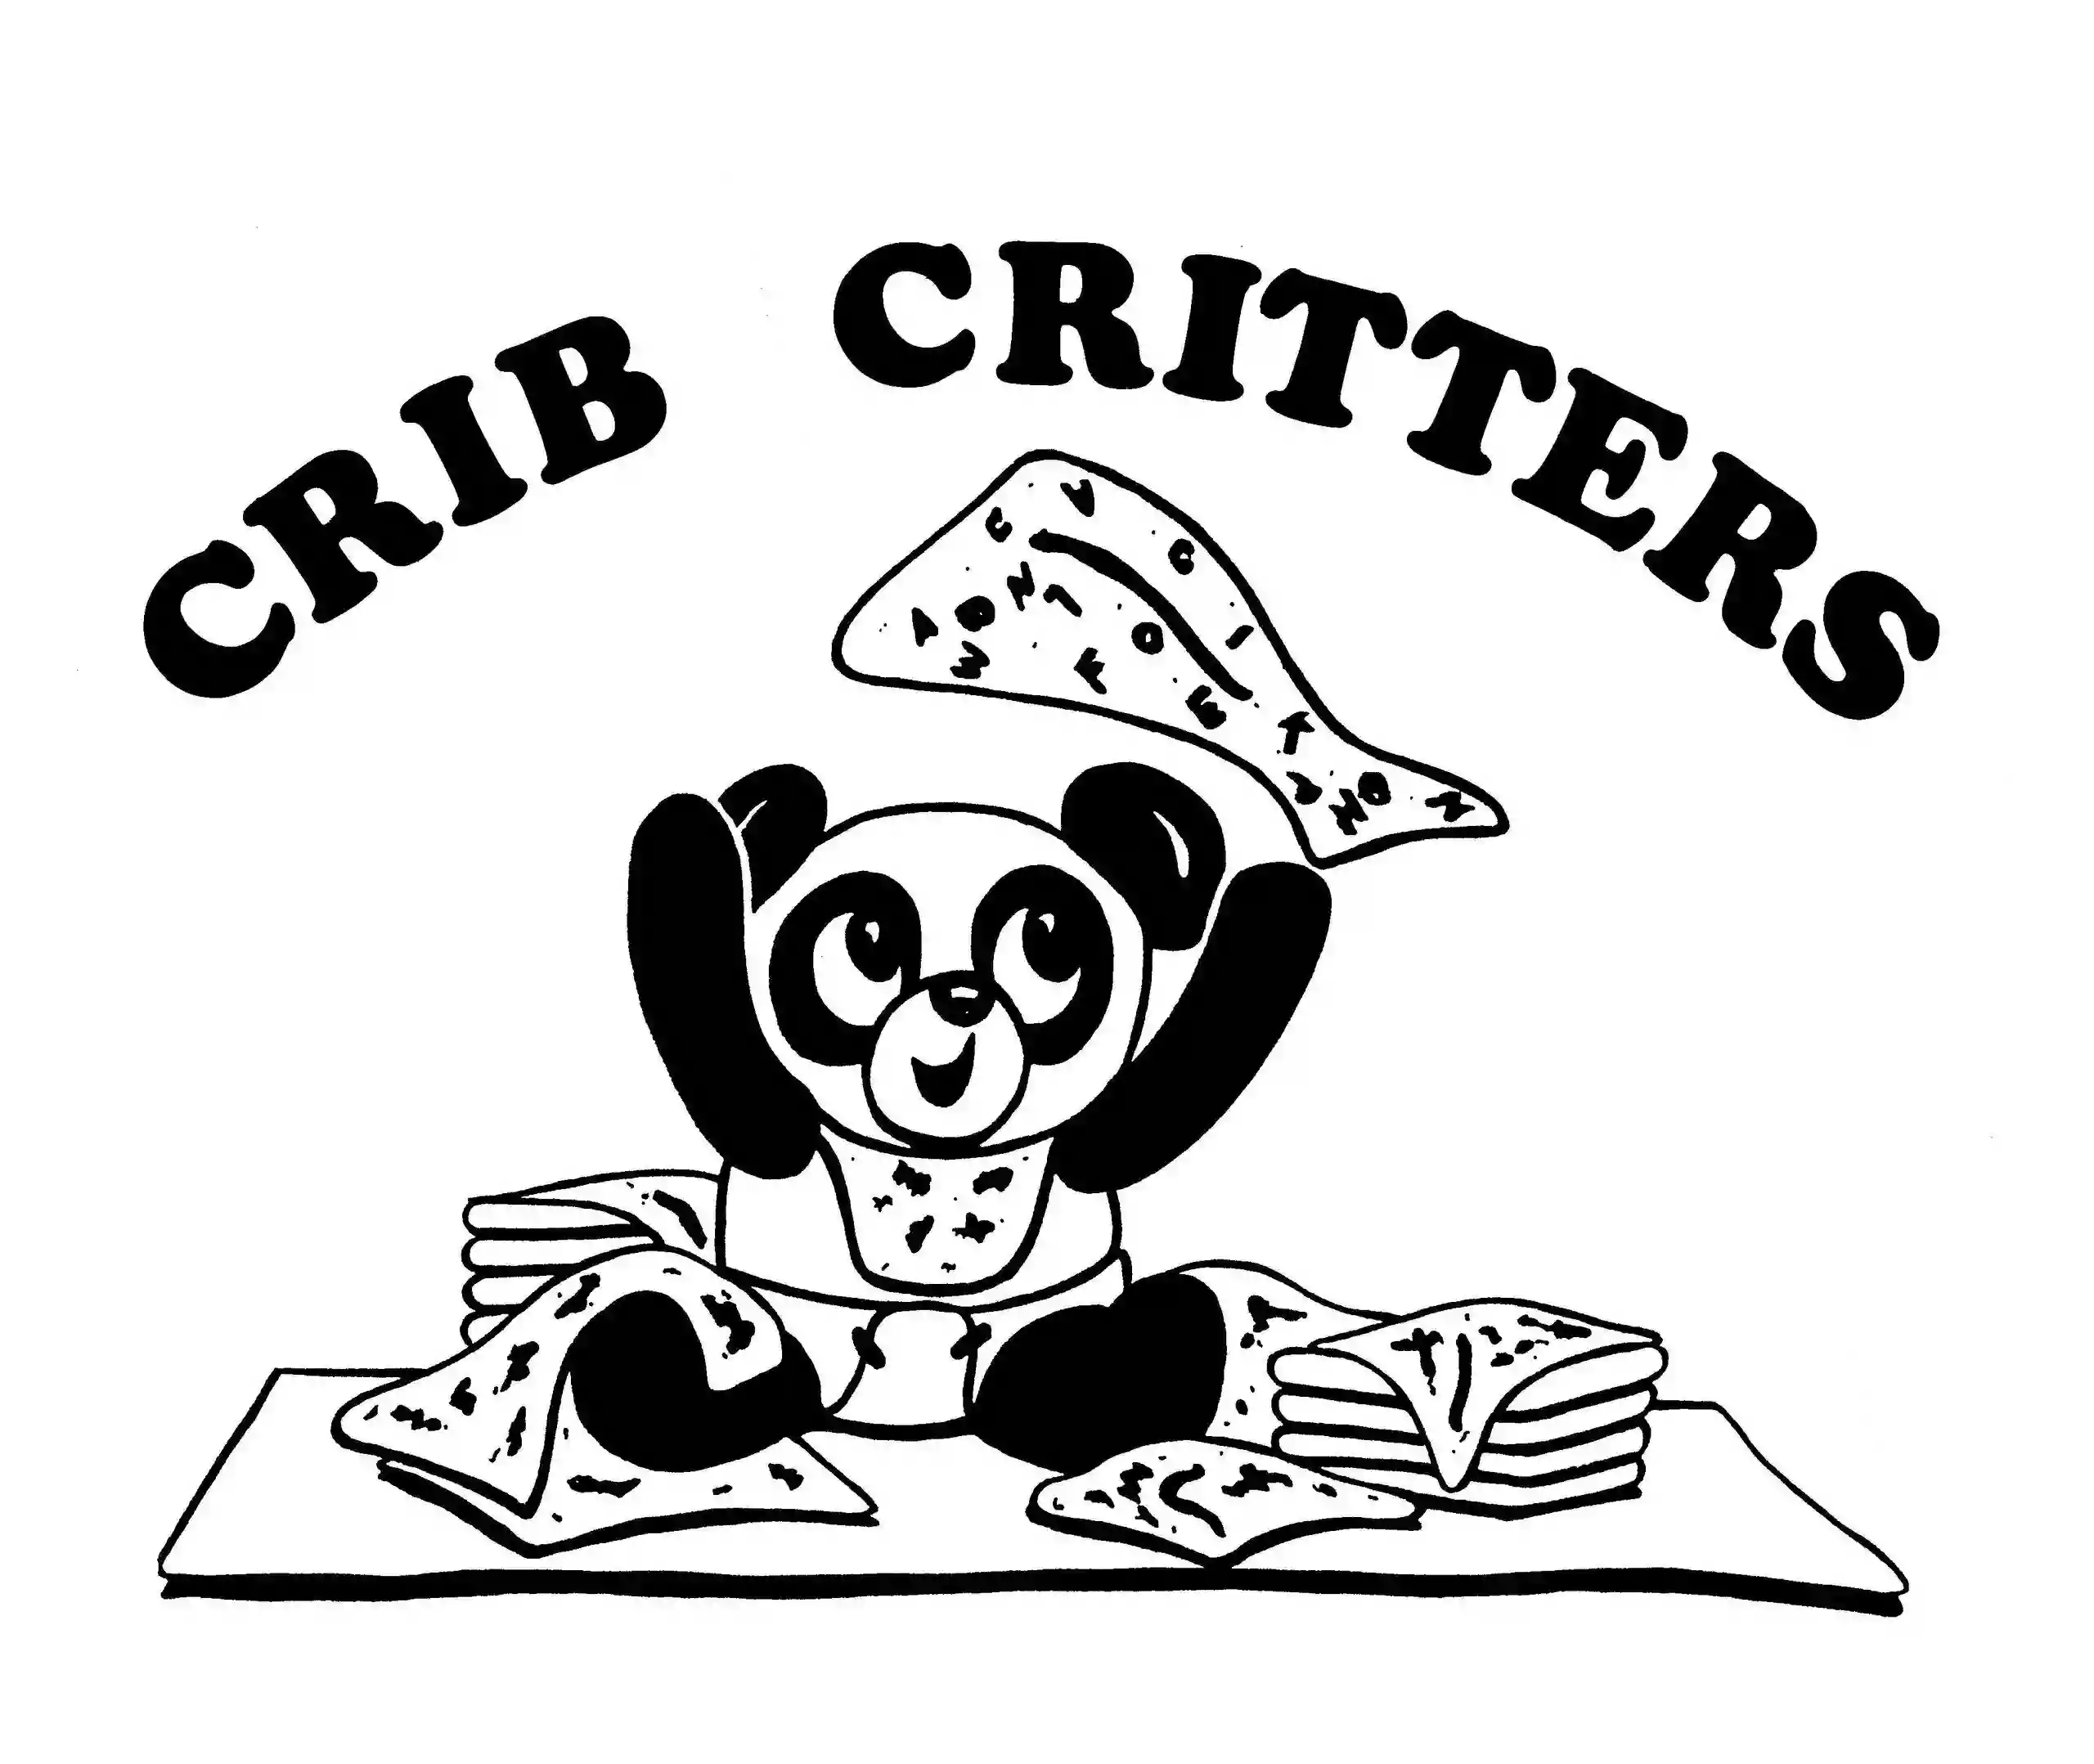 Crib Critters